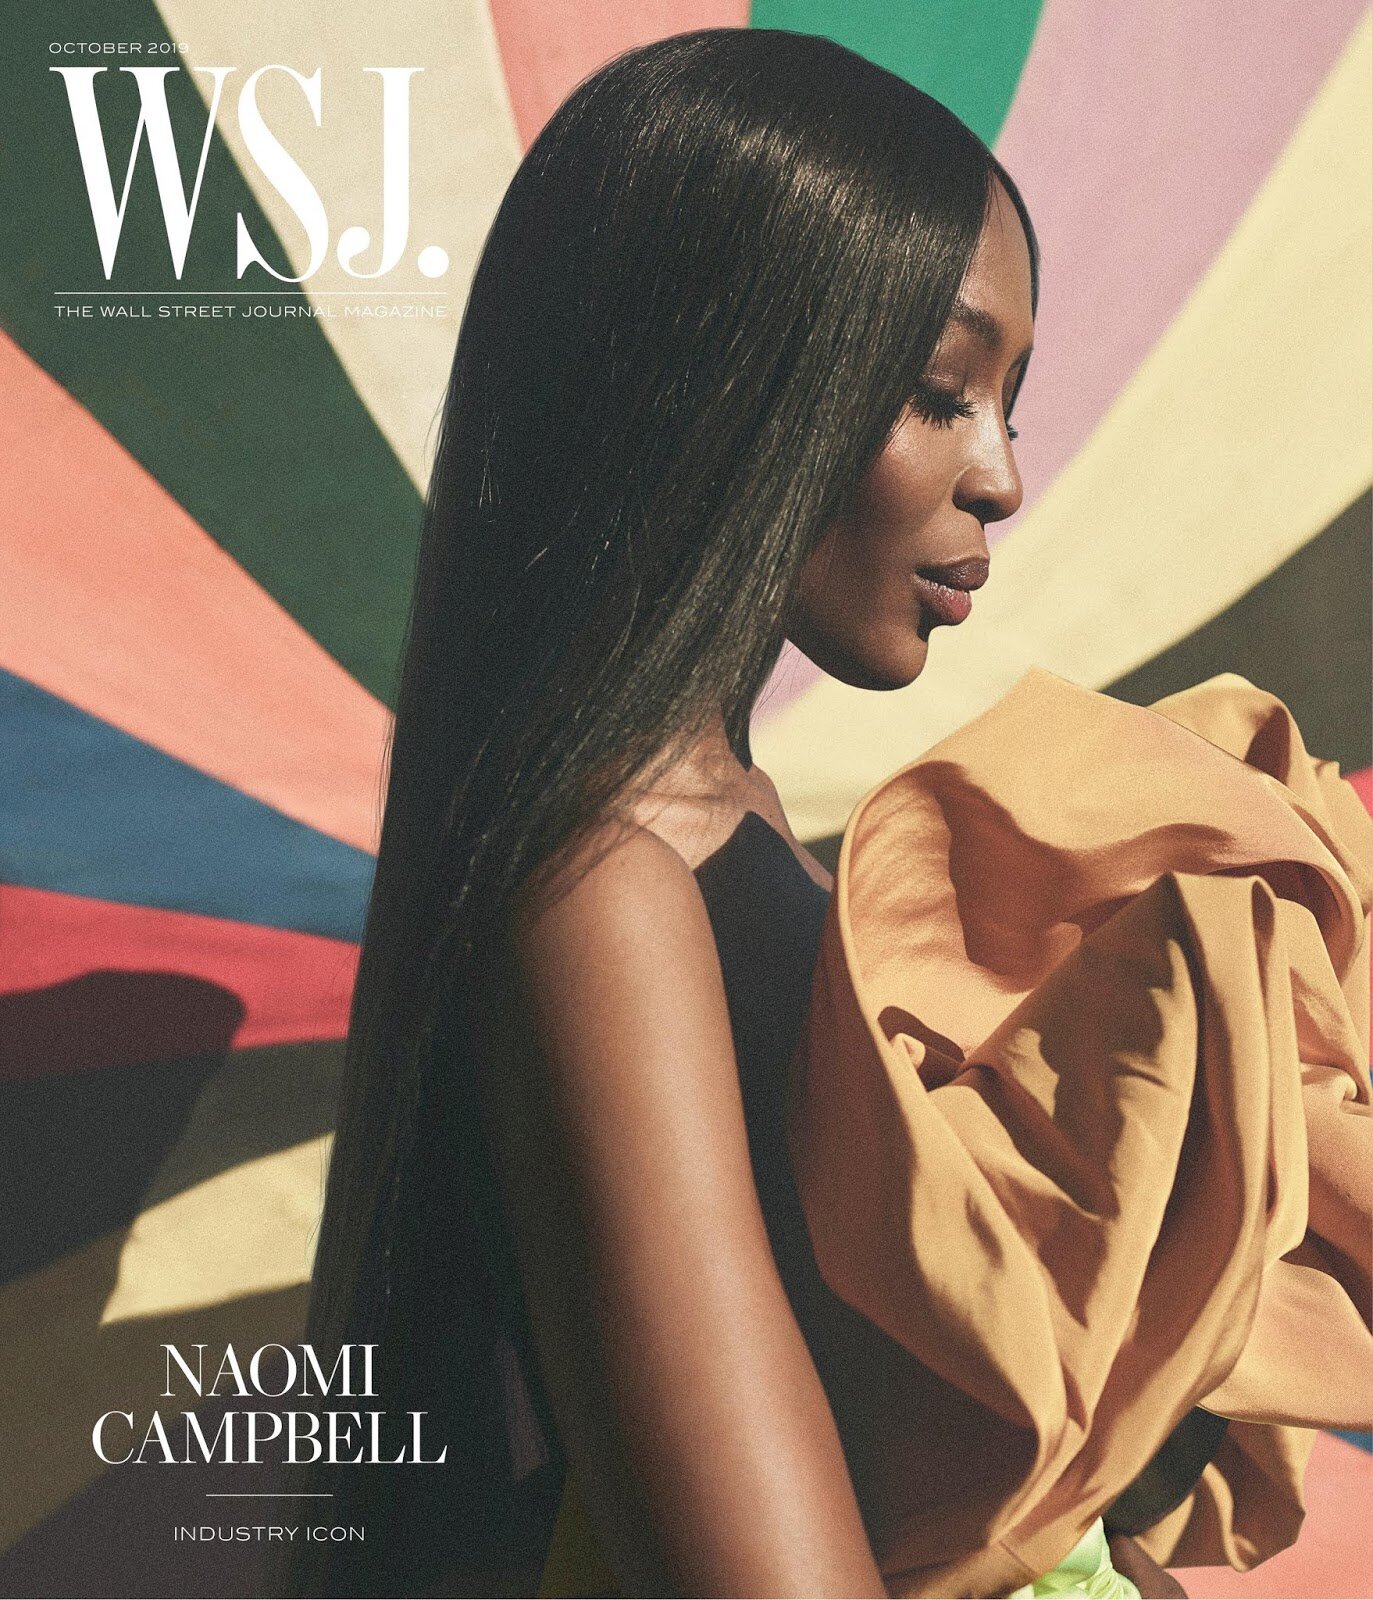 Naomi Campbell by Annemarieke van Drimmelen for WSJ Magazine Oct (2).jpg